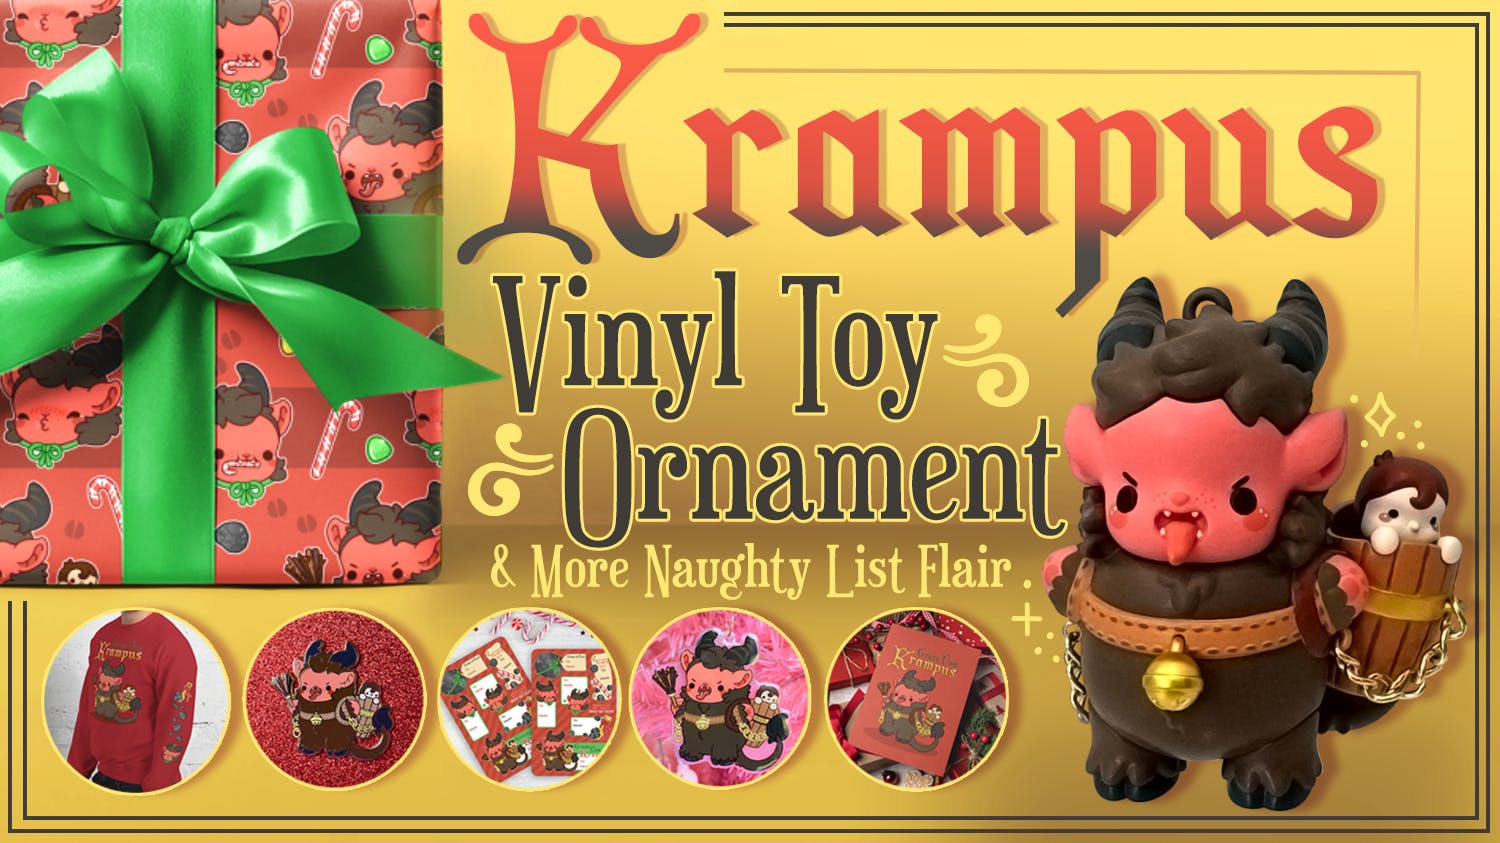 Krampus Vinyl Toy Ornament